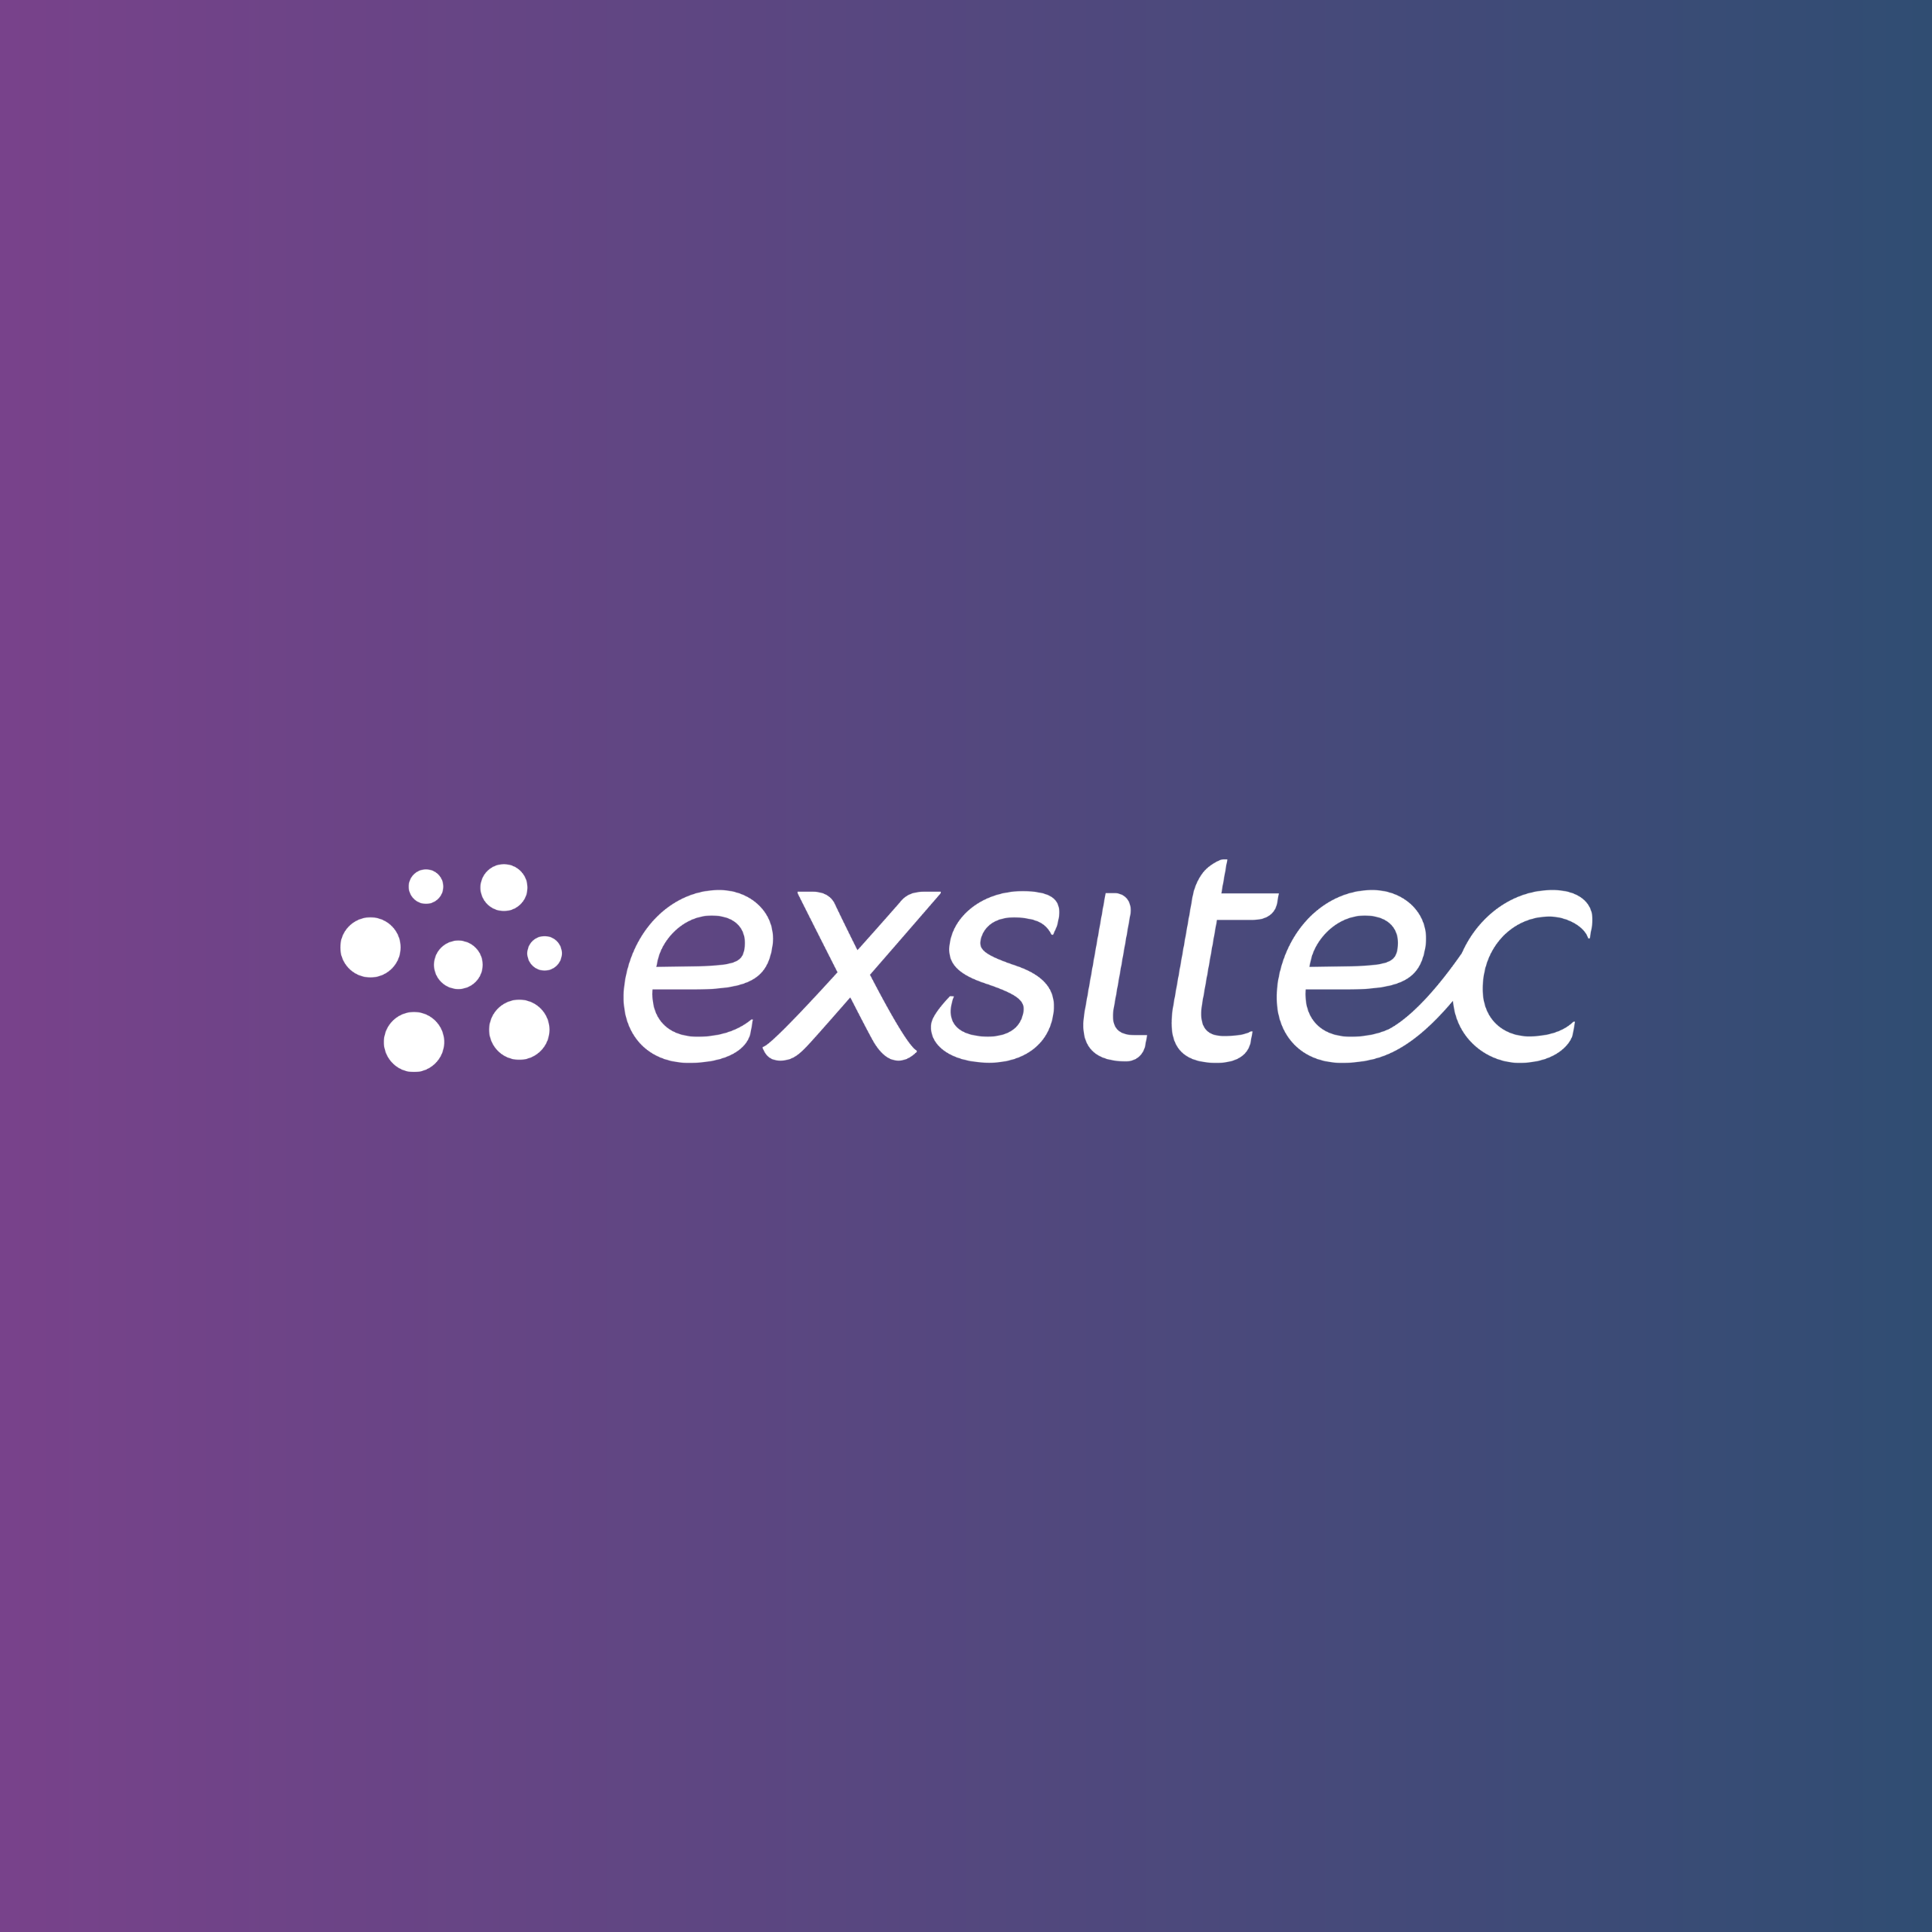 Exsitec logo - with background (1)